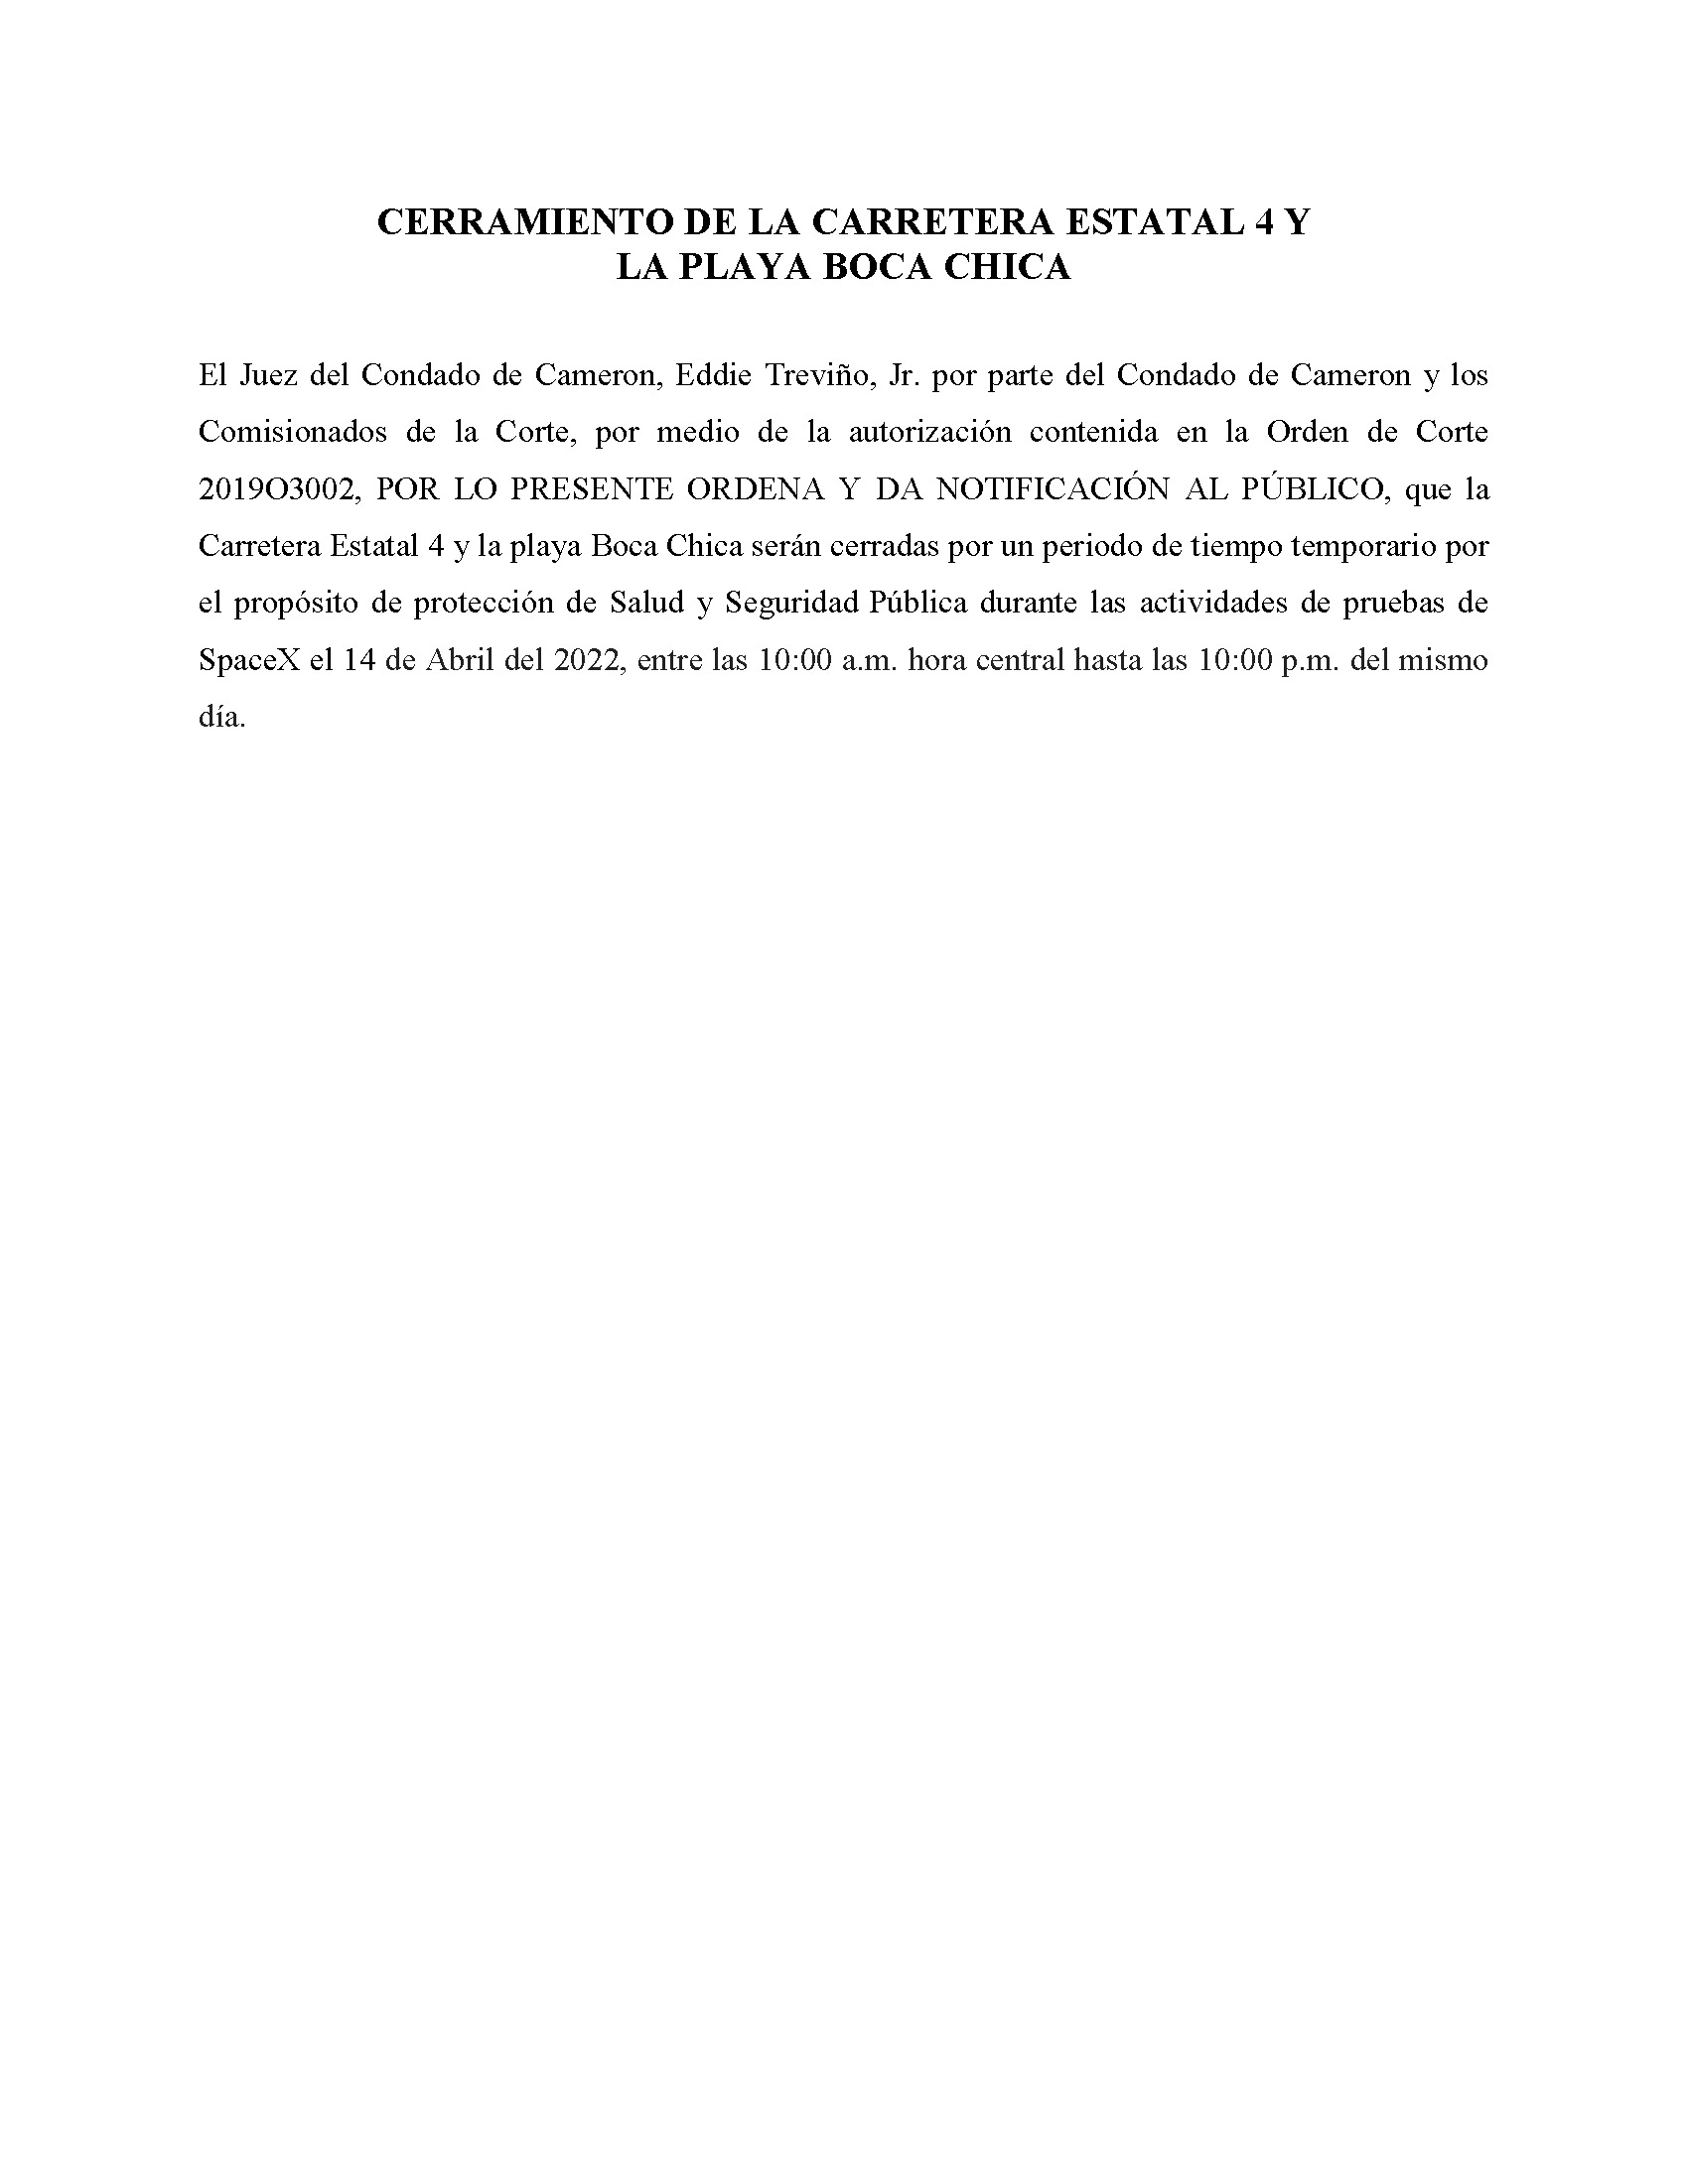 ORDER.CLOSURE OF HIGHWAY 4 Y LA PLAYA BOCA CHICA.SPANISH.04.14.2022